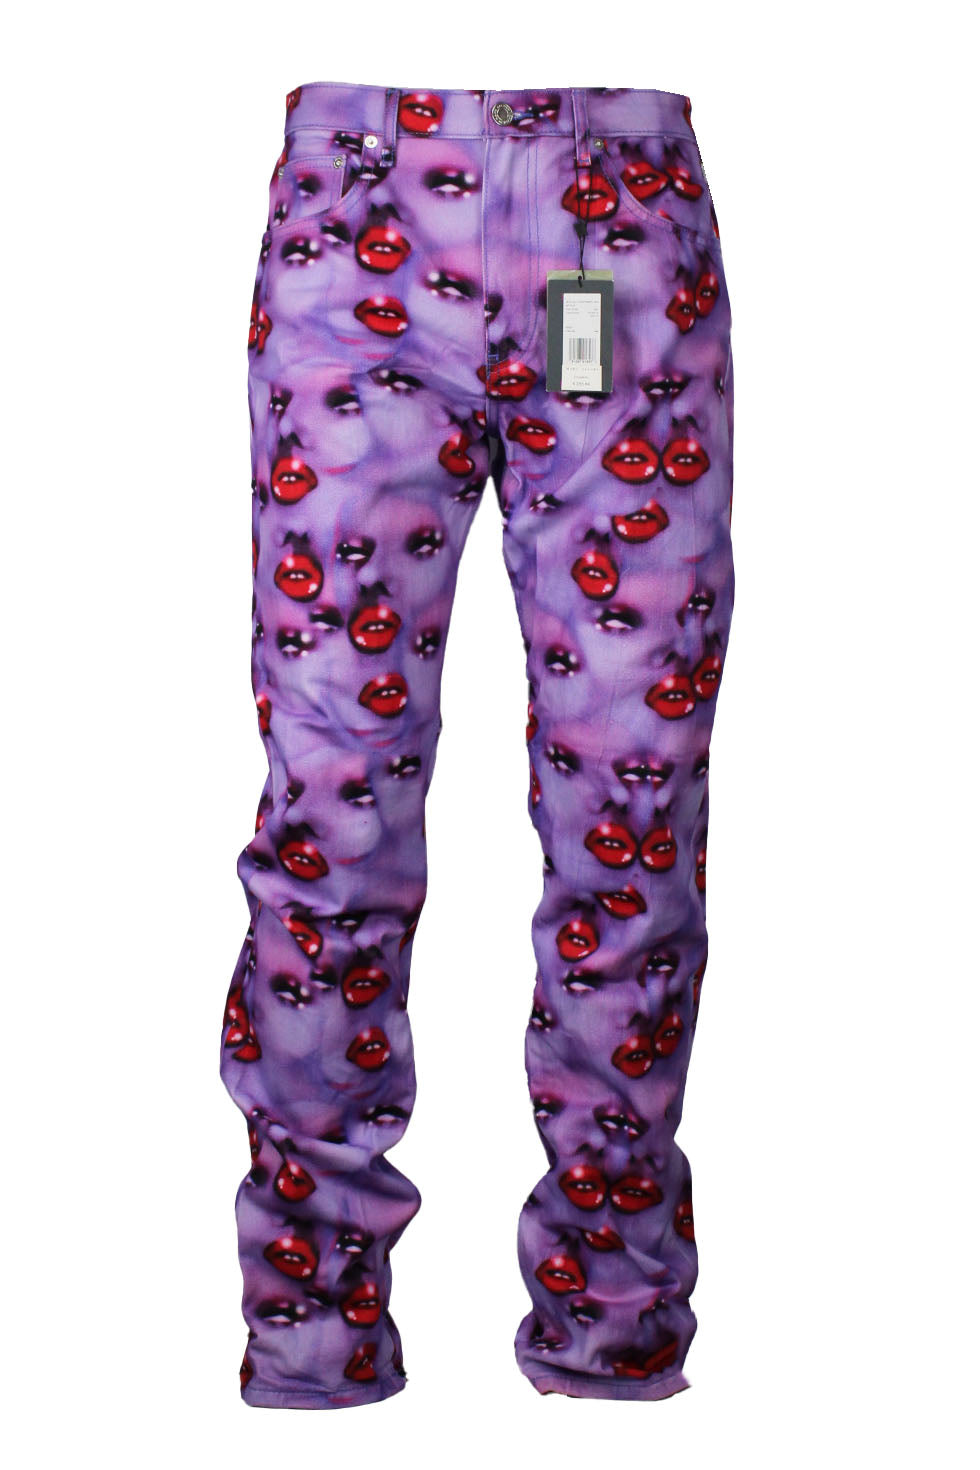 description: heaven by marc jacobs purple kiss face print pants. features straight leg, high rise, zip fly, and button closure. 